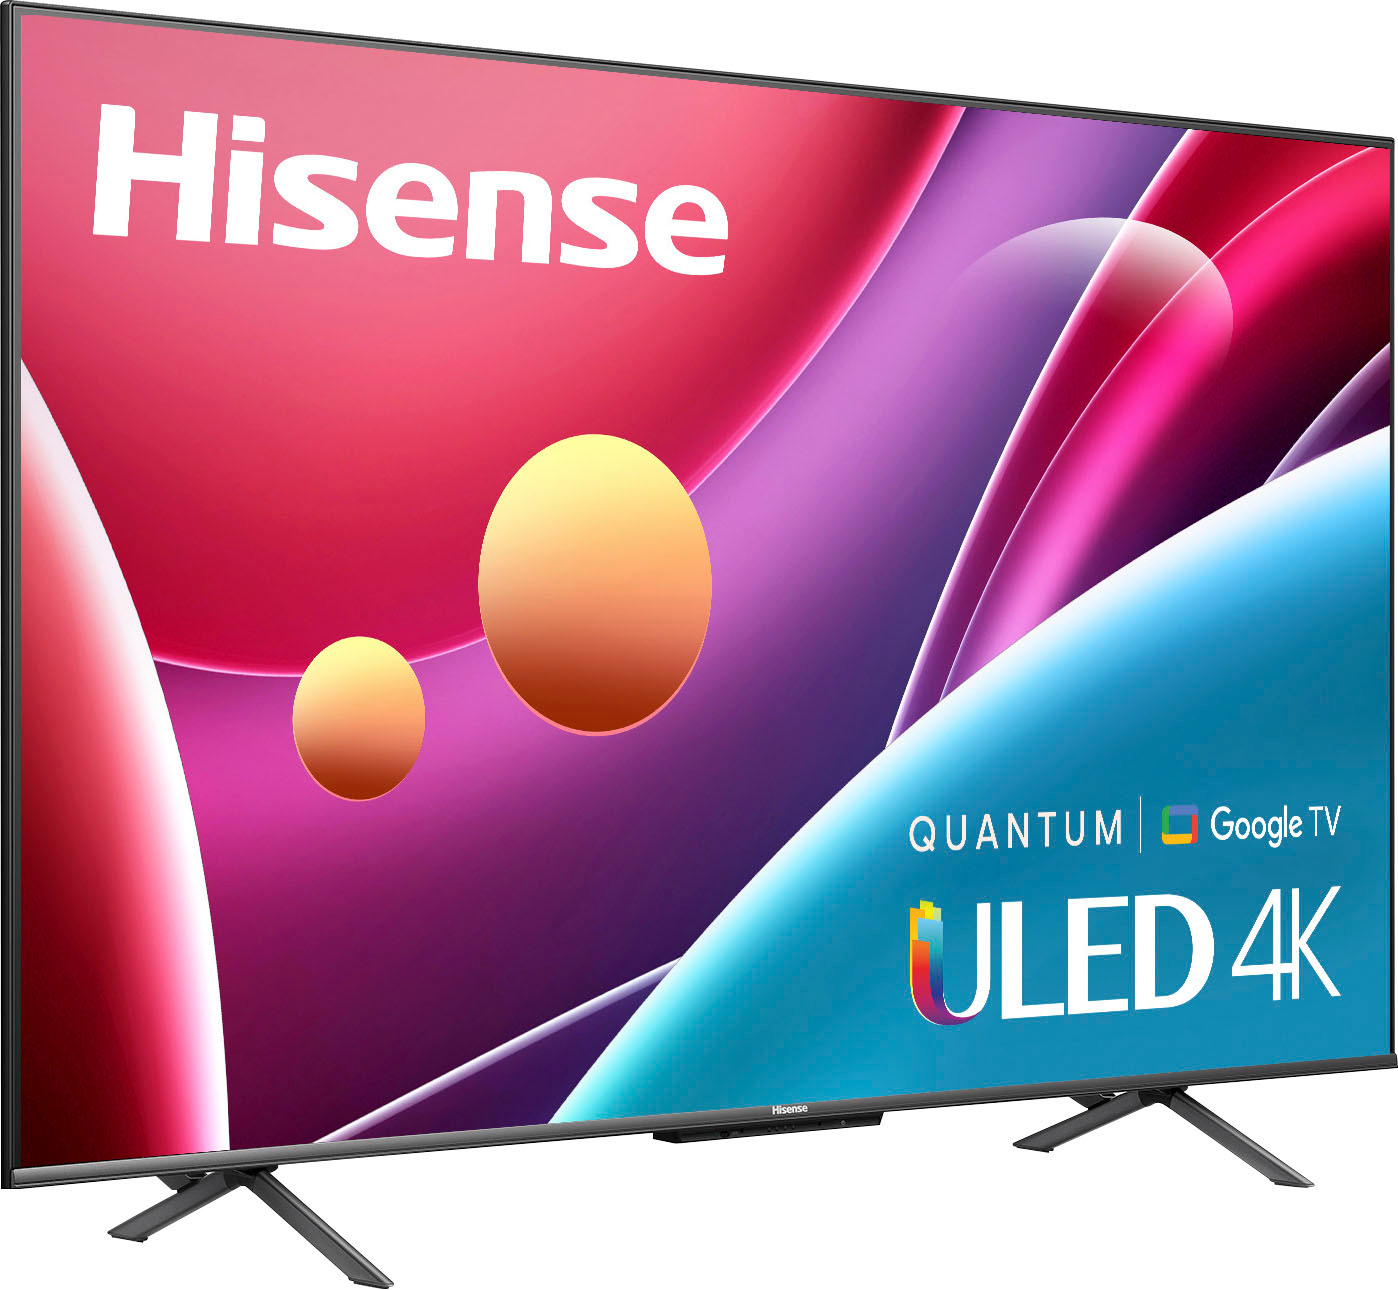 Hisense 55" U6H (2022) Q-ULED 4K UHD HDR Google TV @ Amazon $430